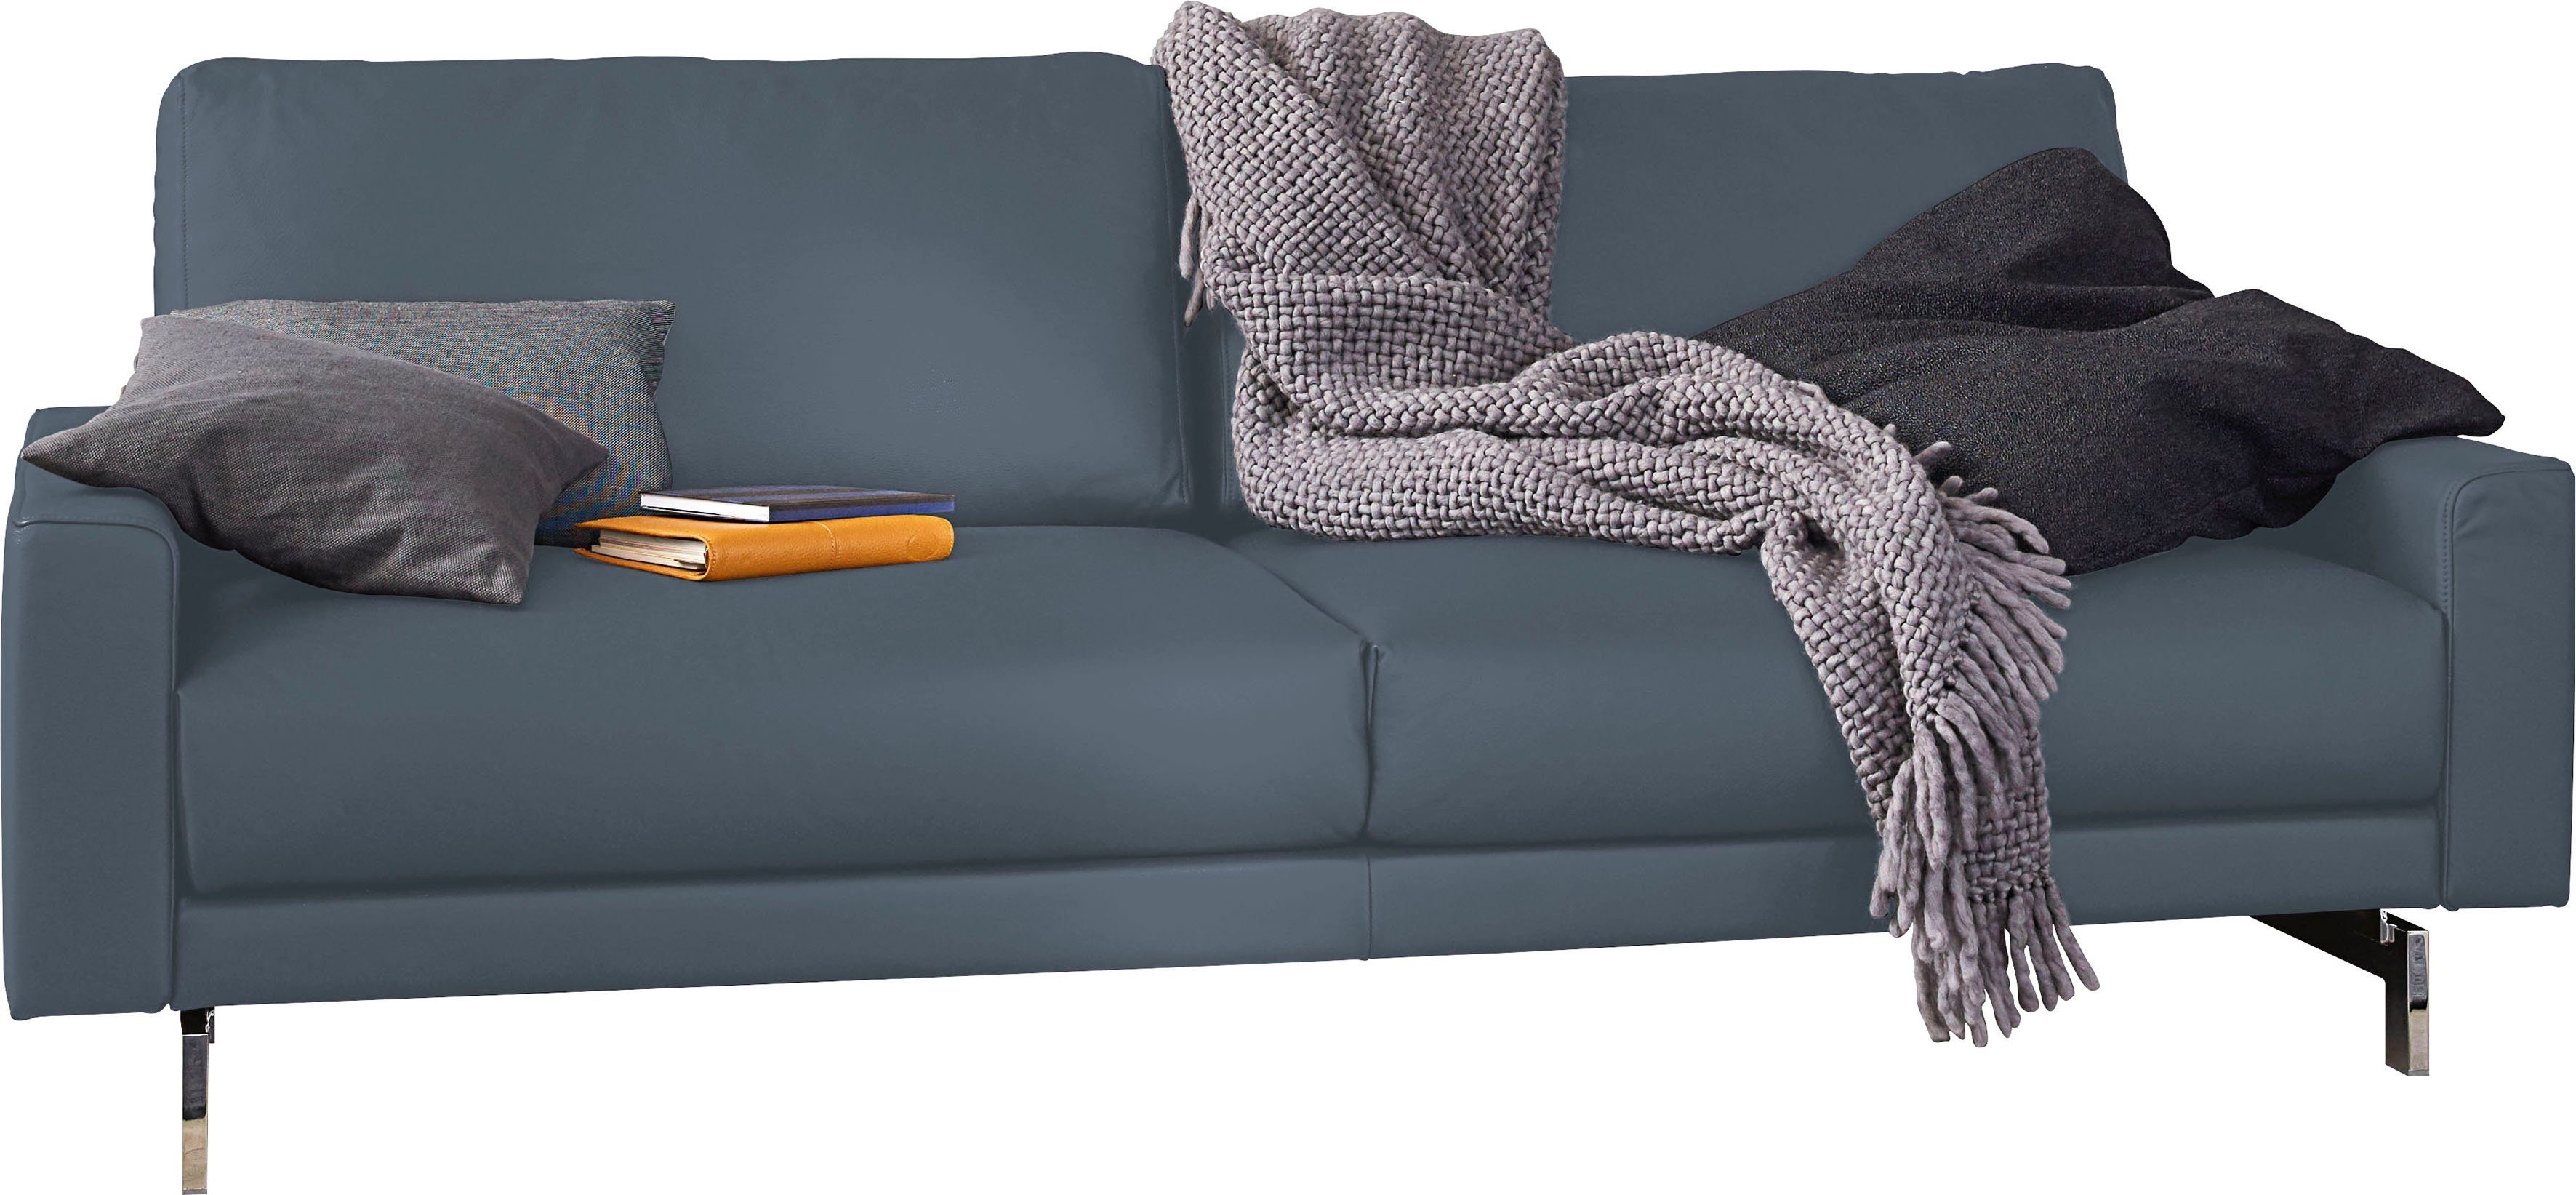 184 2,5-Sitzer Armlehne chromfarben Breite cm sofa glänzend, niedrig, Fuß hs.450, hülsta